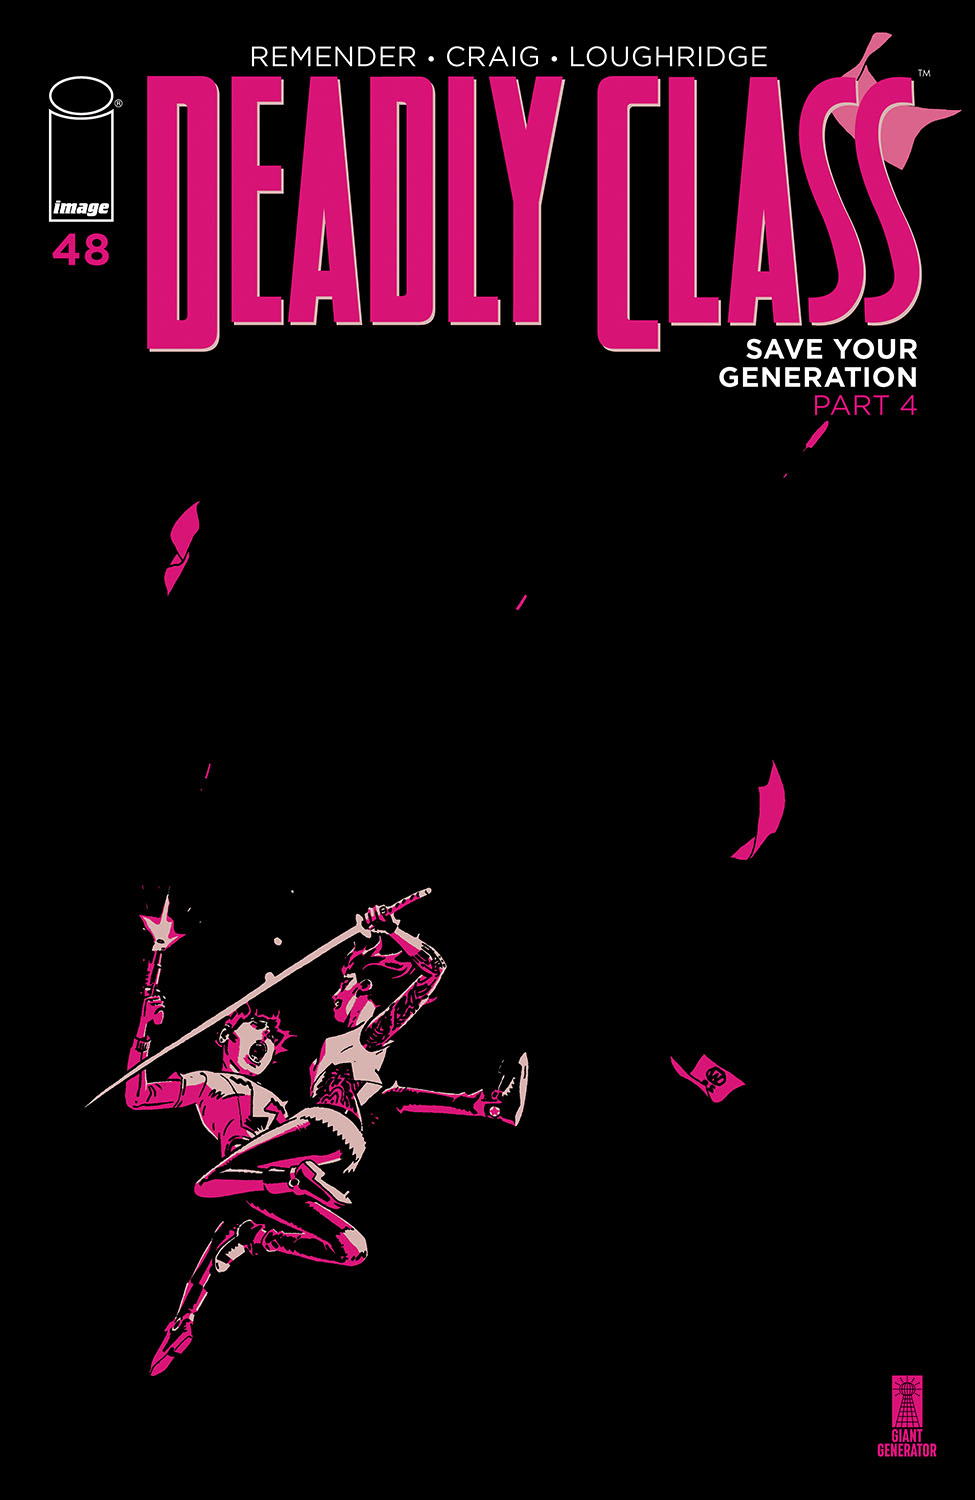 Deadly Class #48 Cover A Craig & Loughridge (Mature)